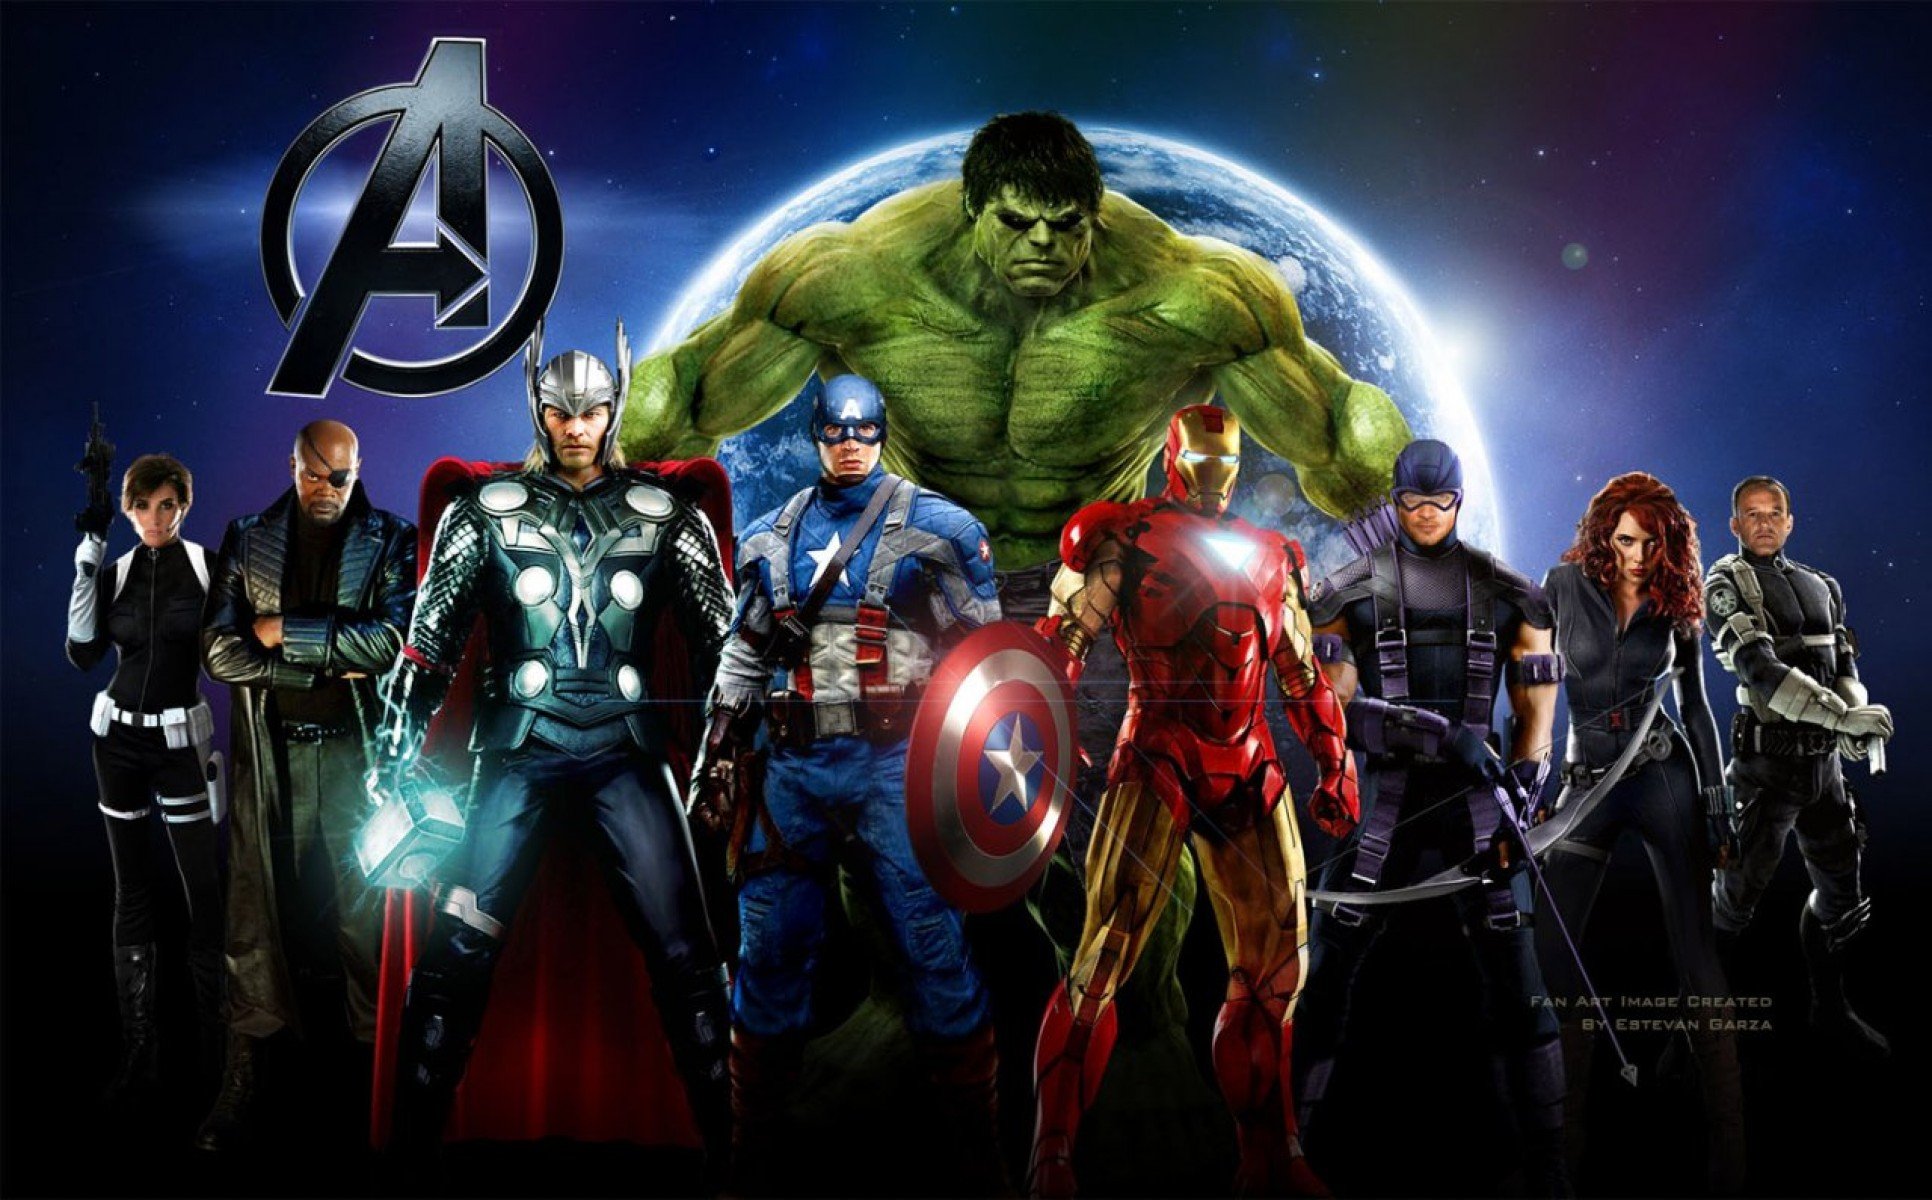 avengers, Age, Ultron, Marvel, Comics, Superhero, Ageultron, Action, Adventure, Fighting, Warrior, Poster Wallpaper